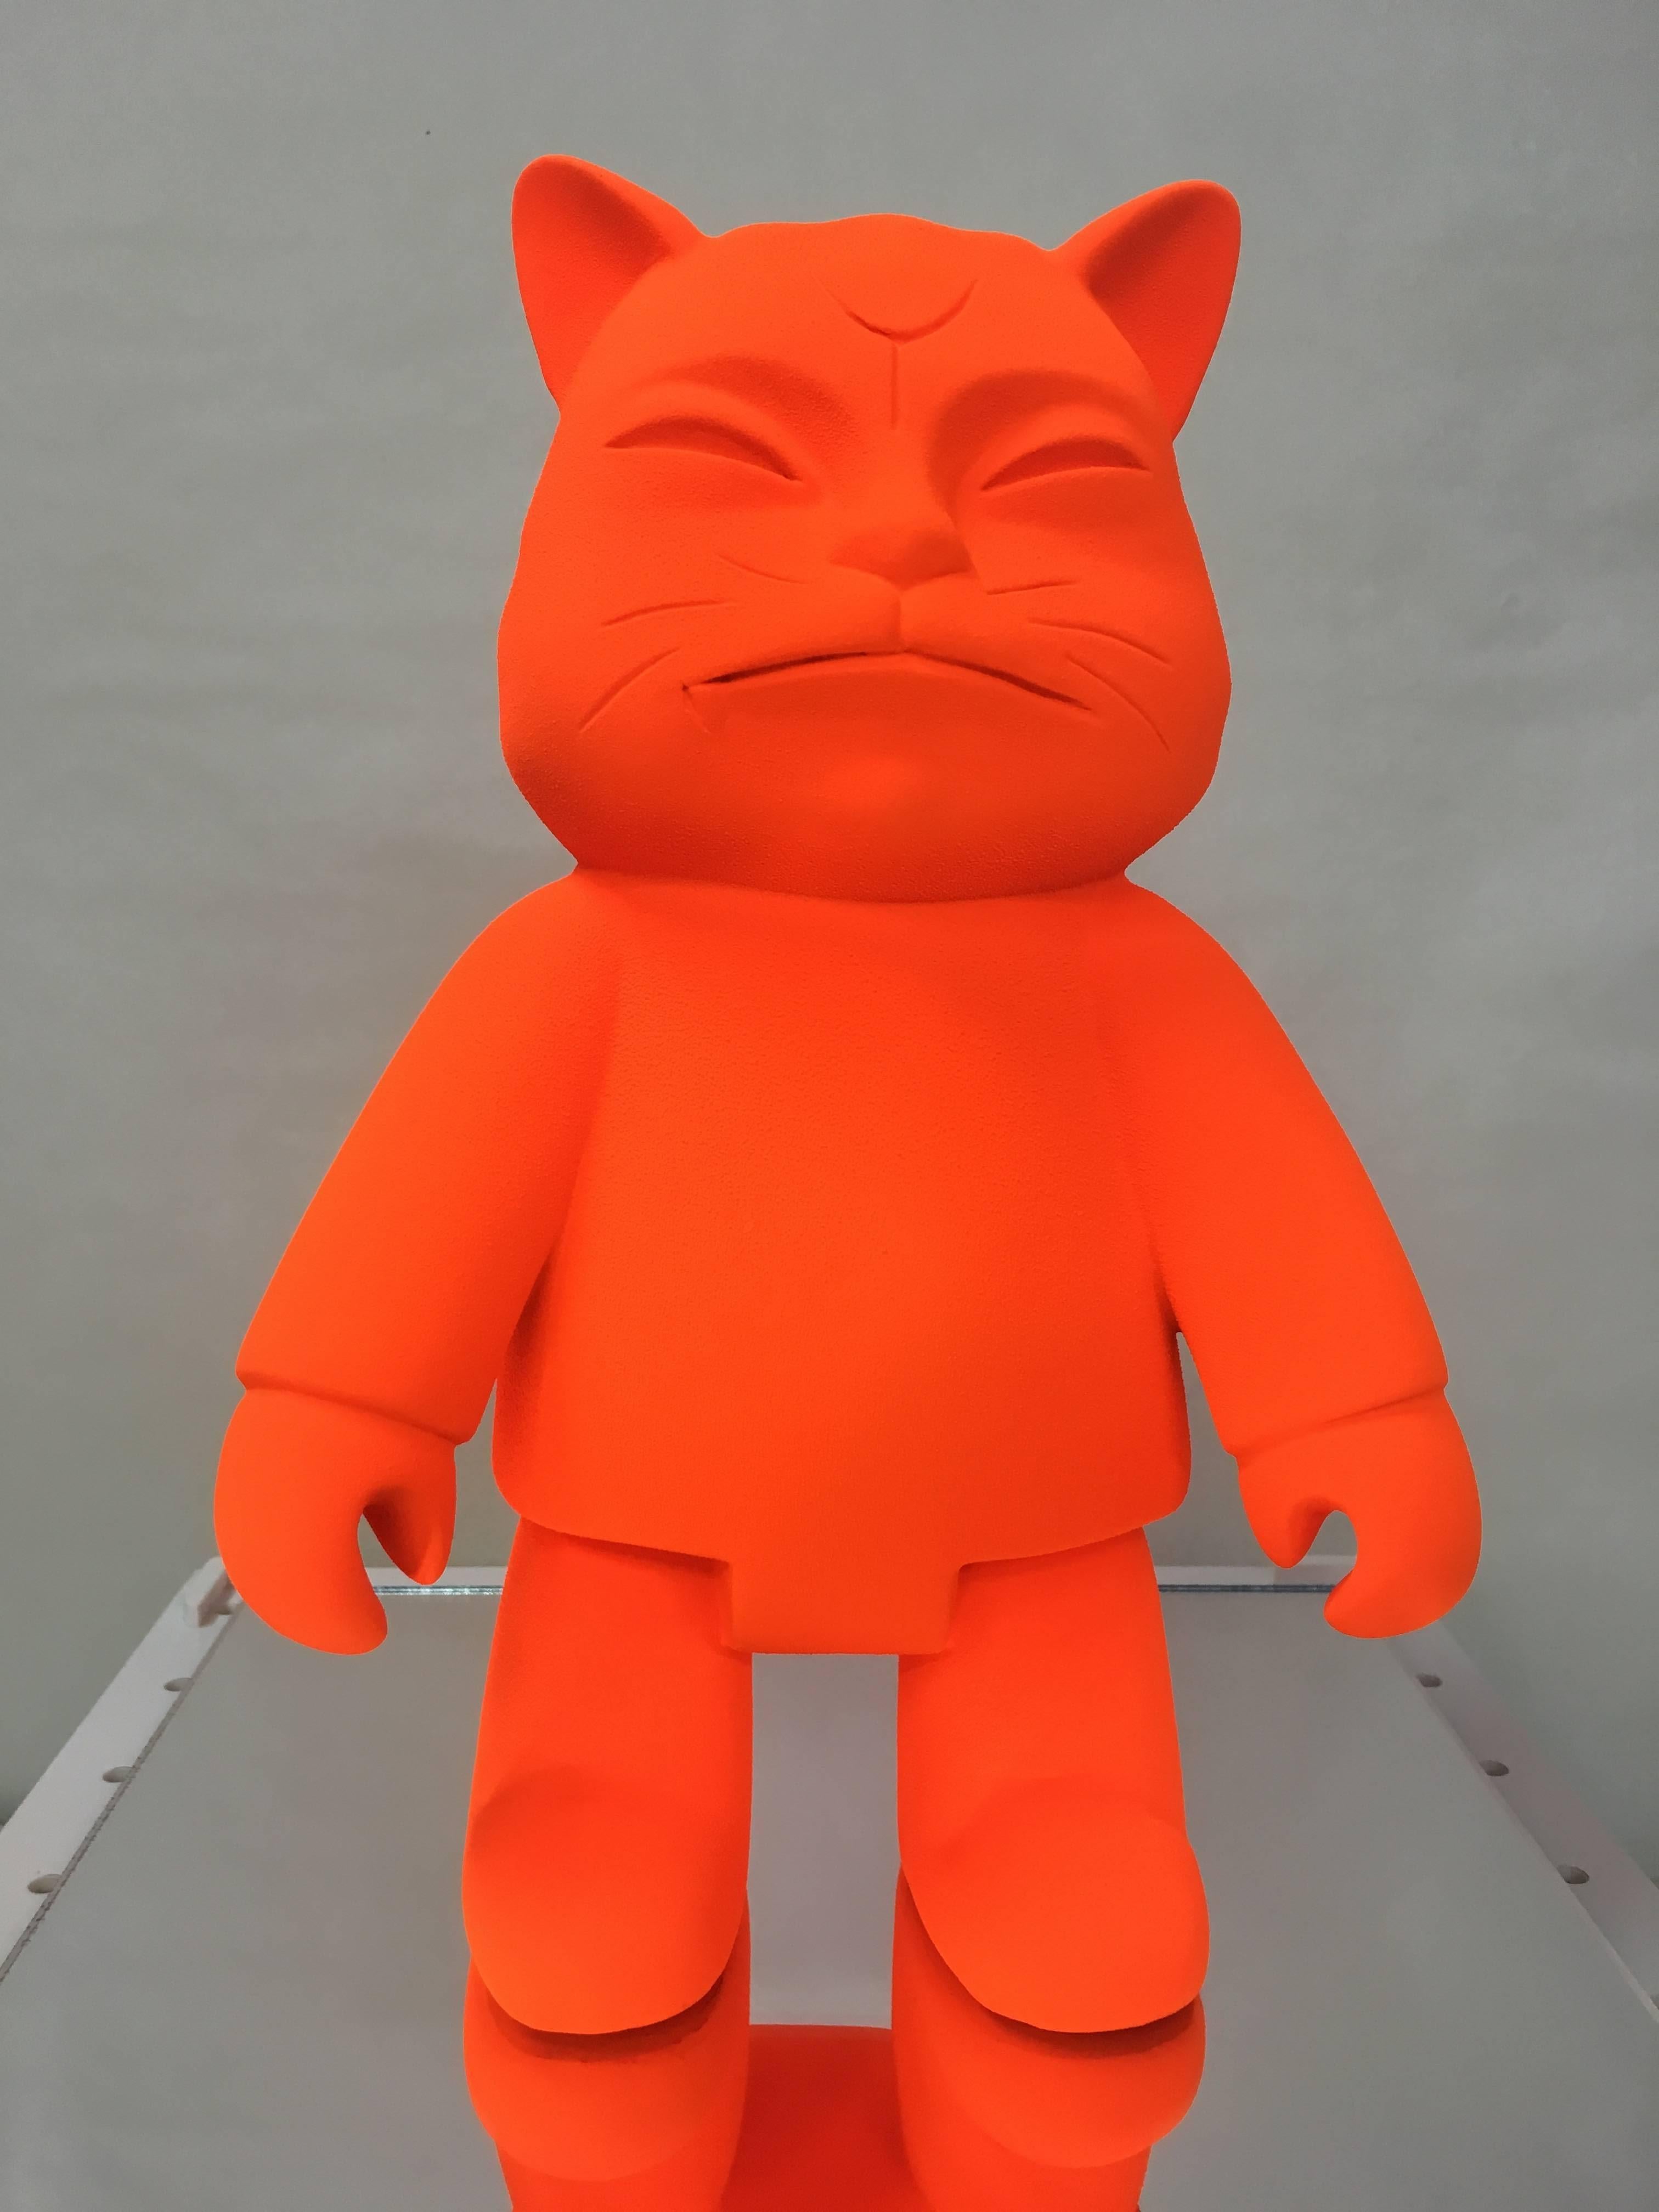 HIRO ANDO Figurative Sculpture -  Hiro Ando  Cat  Orange. "ROBOCAT MONOLOGY" original sculpture 